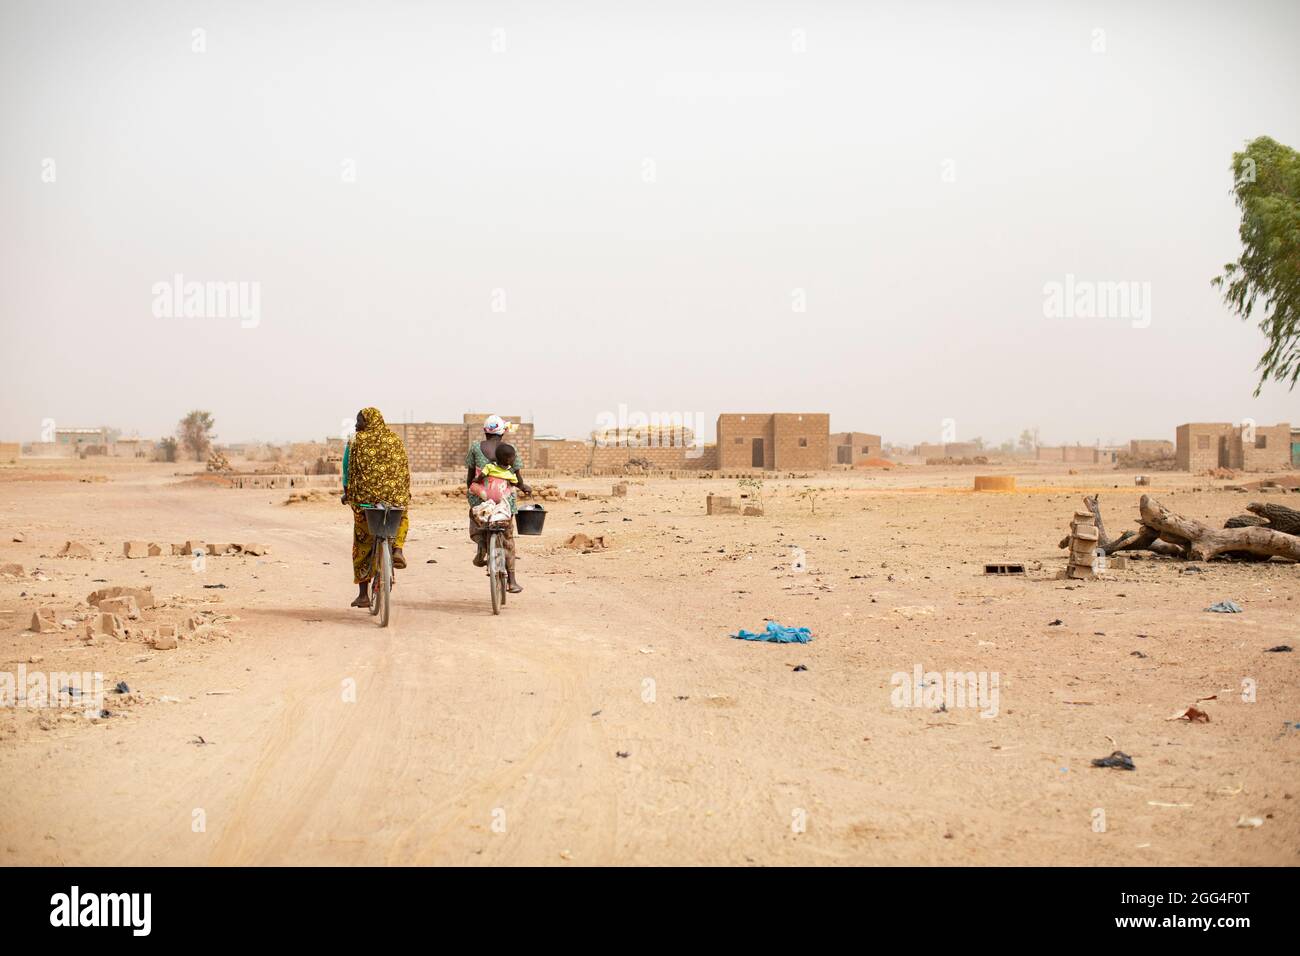 Arid Sahel landscape in Nouna, Burkina Faso, West Africa. Stock Photo